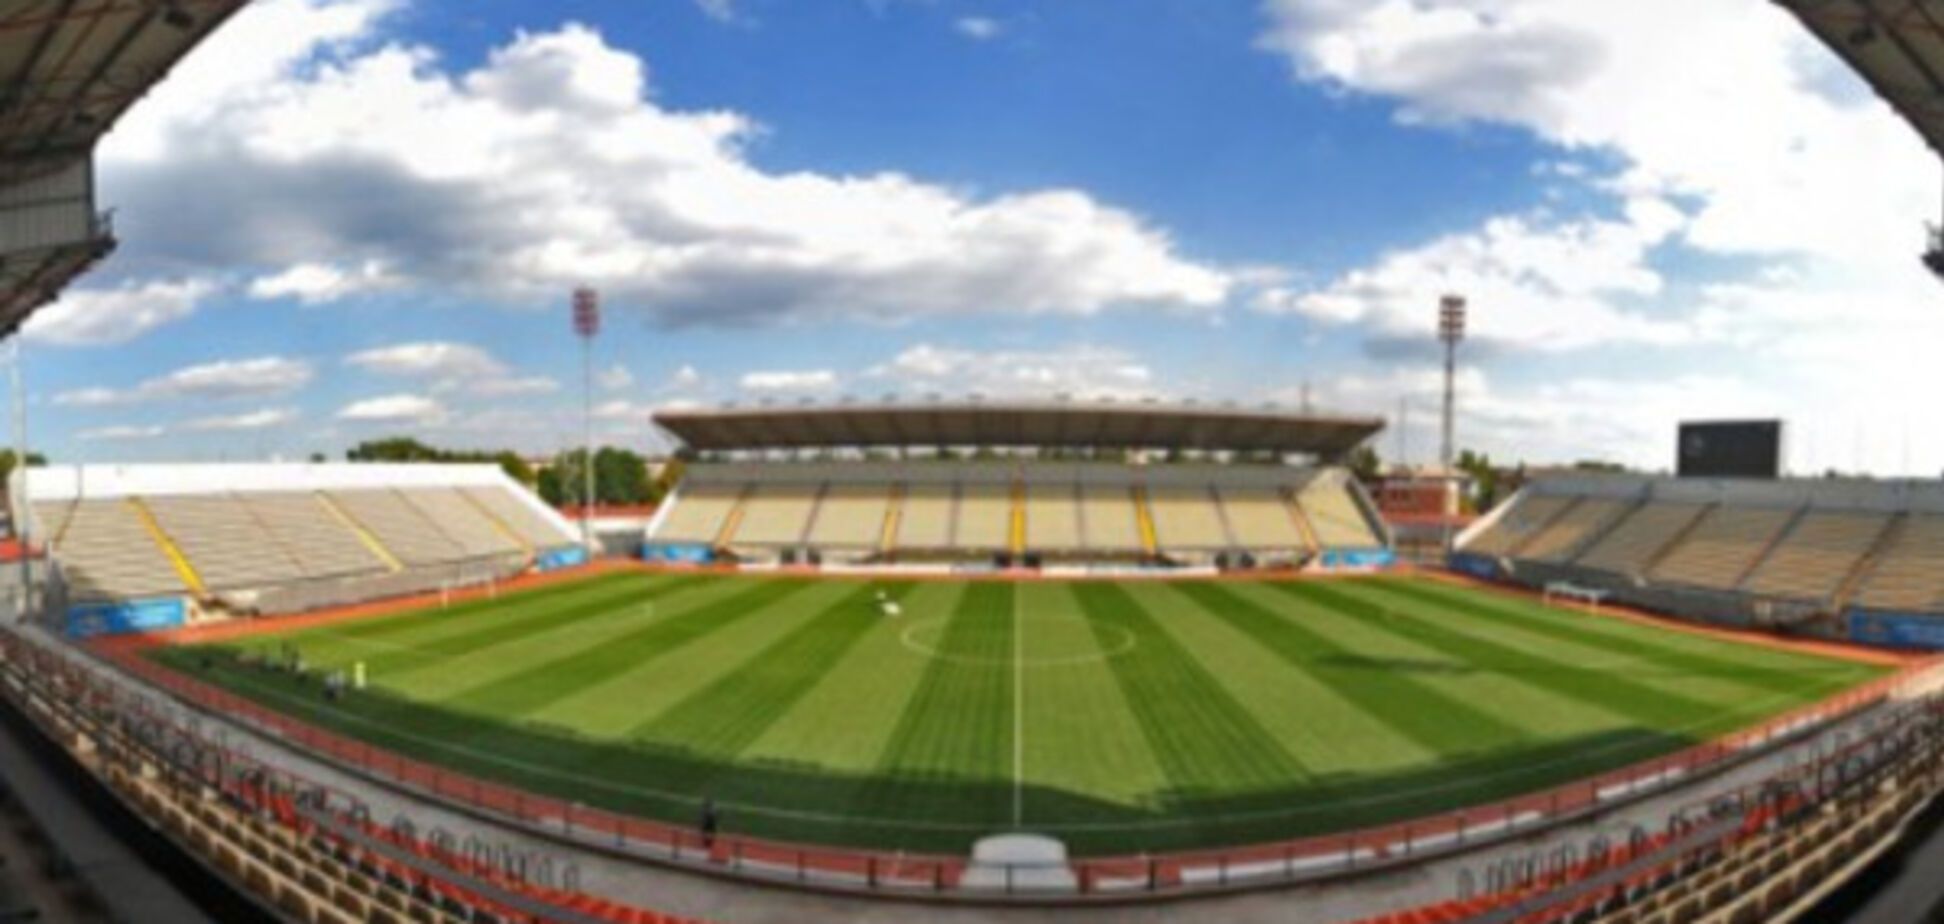 На запорожском стадионе проведут  масштабную ярмарку